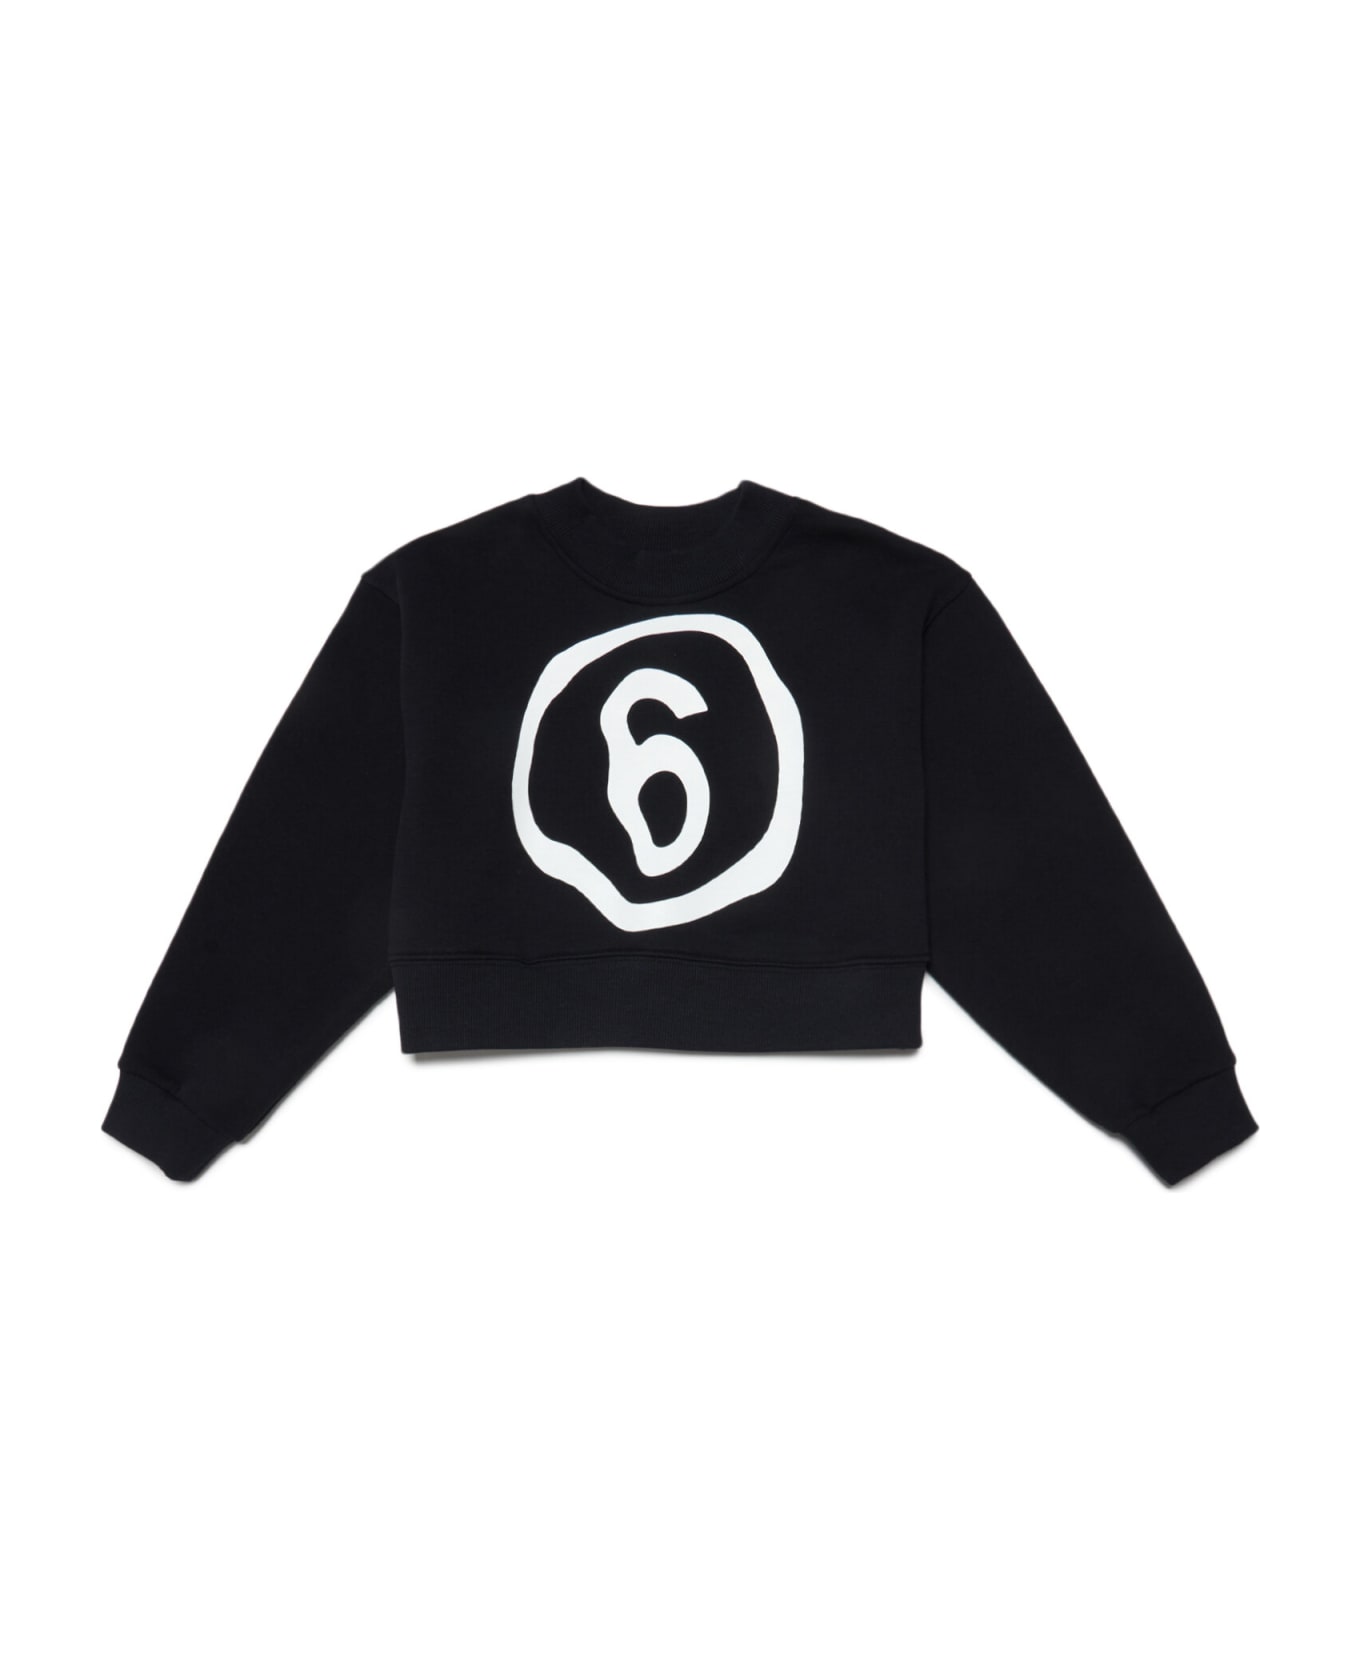 MM6 Maison Margiela Mm6s53u Sweat-shirt Maison Margiela Black Cropped Crew-neck Cotton Sweatshirt With Fluid Effect Logo - M6900 ニットウェア＆スウェットシャツ